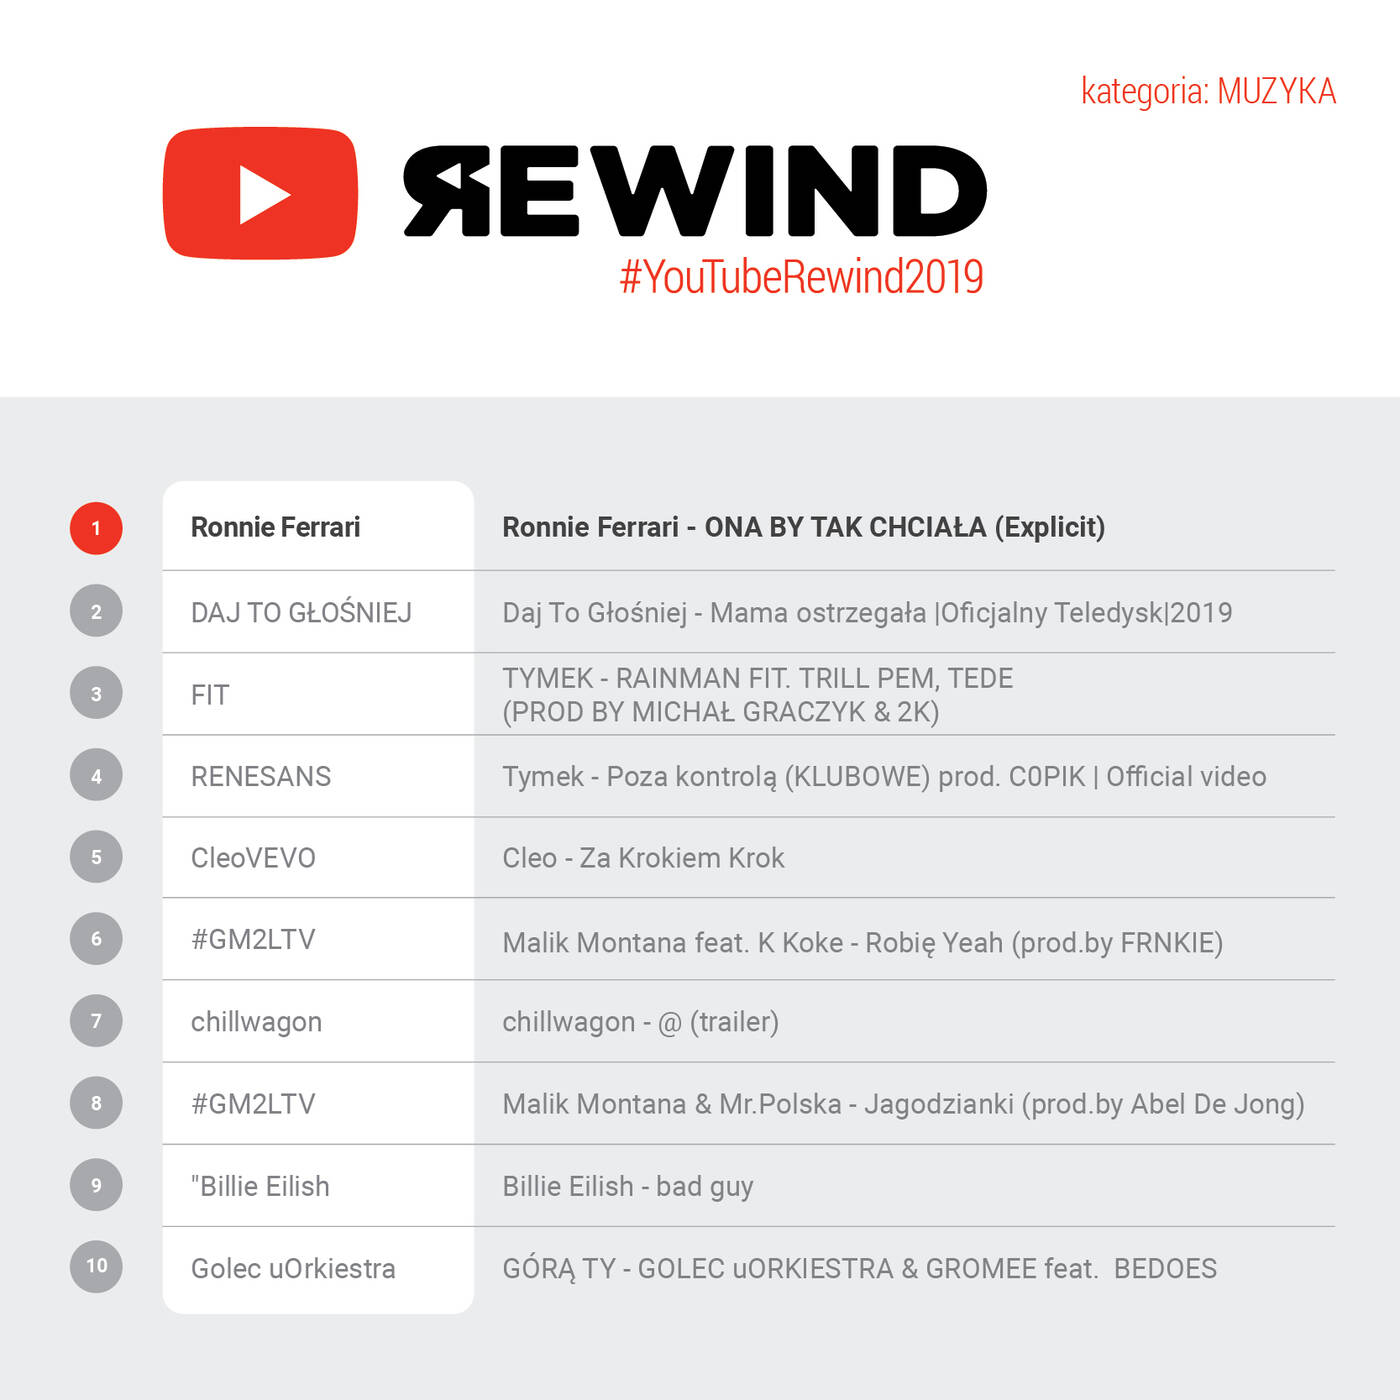 YouTube Rewind 2019, nagrody YouTube Rewind 2019